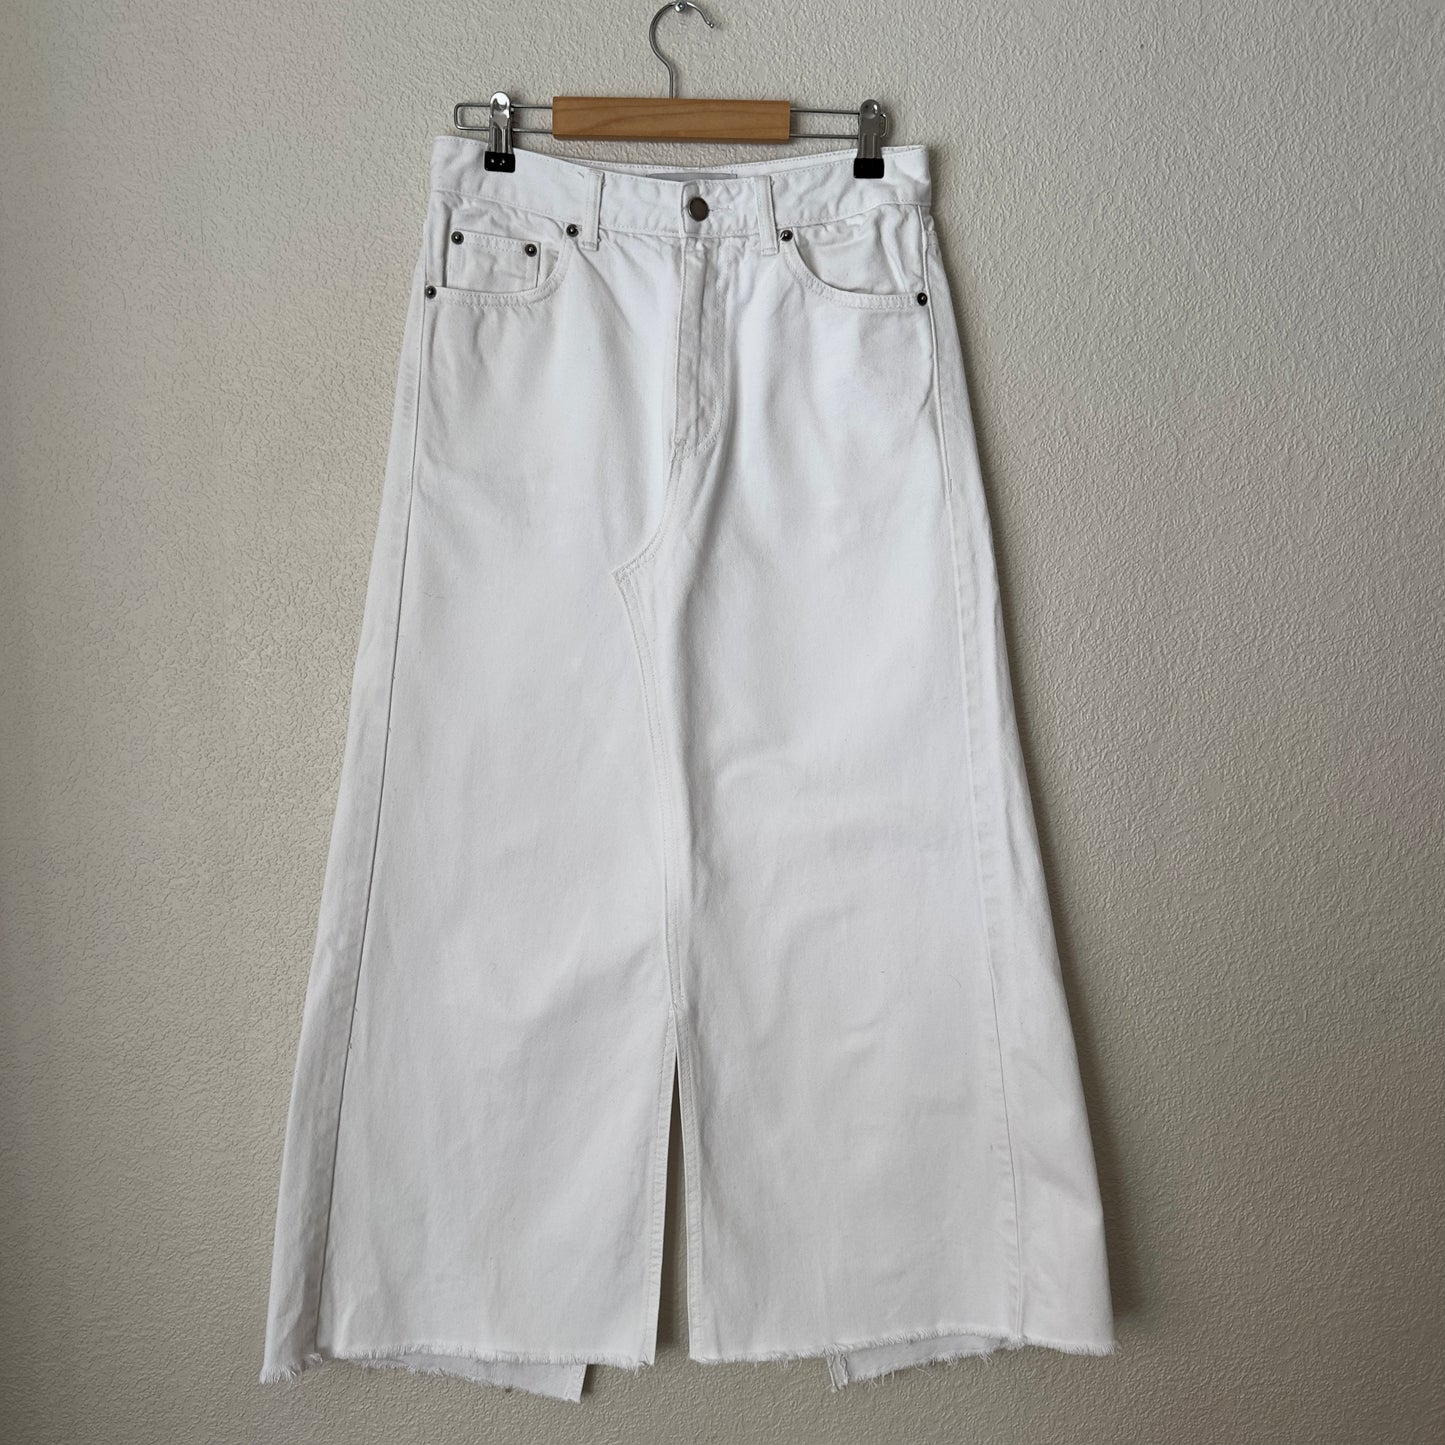 Upcycled Denim Skirt 12 - White/Frayed - size M